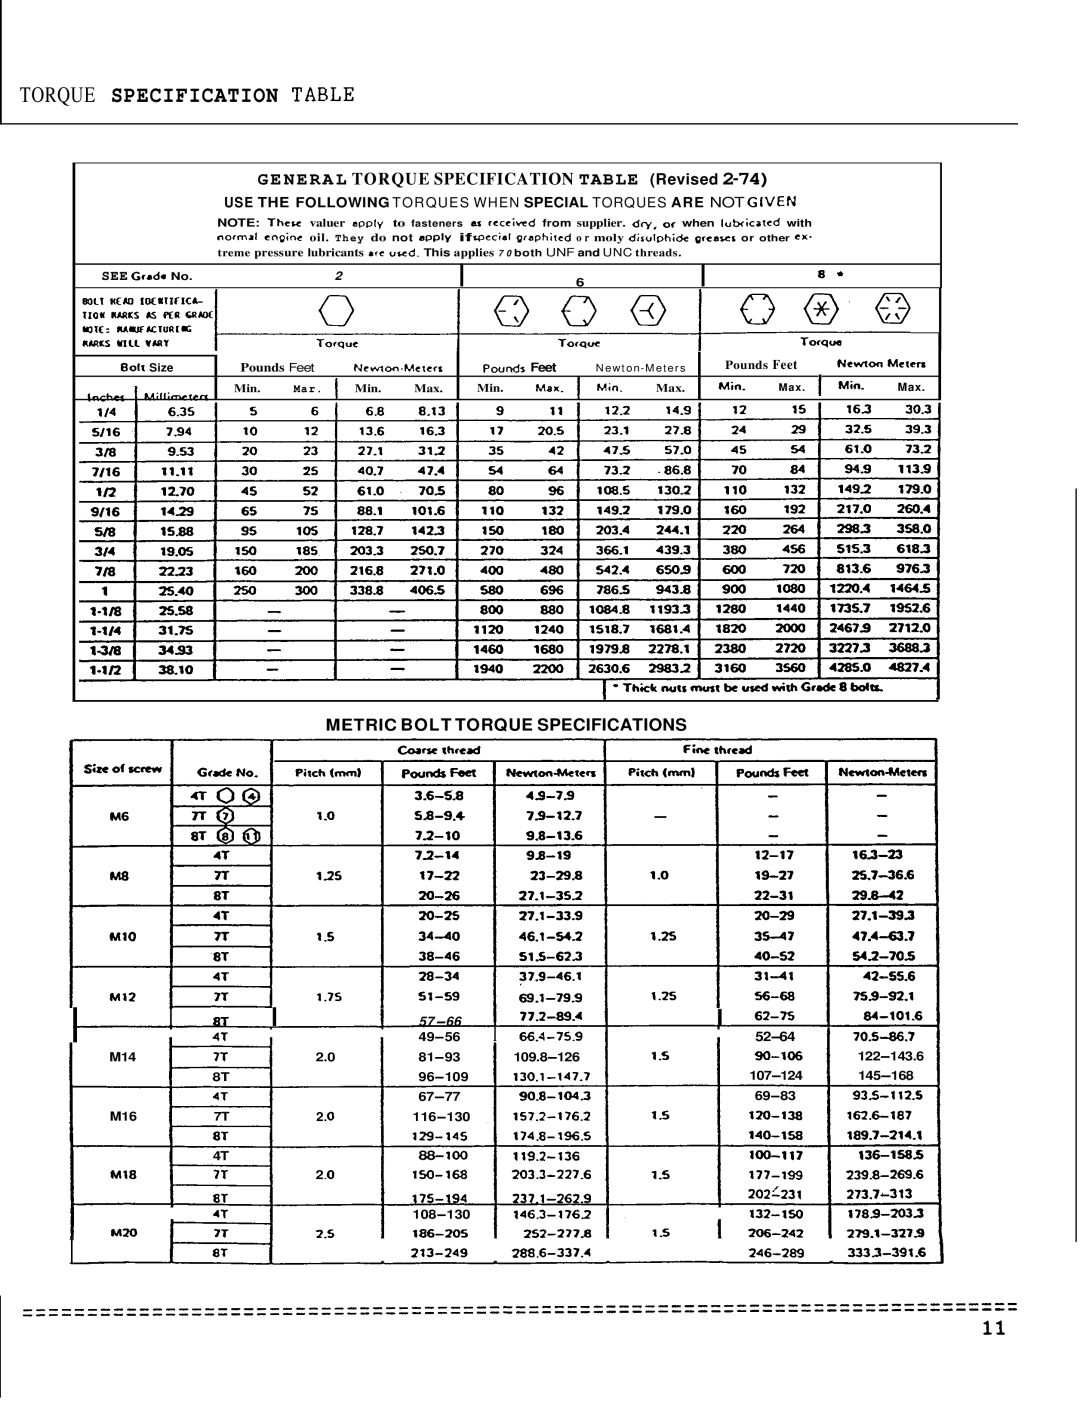 Honda Power Equipment QH4000 Torque Specification Table, GENERAL TORQUE SPECIFICATION TABLE Revised, Pounds Feet, 57-66 